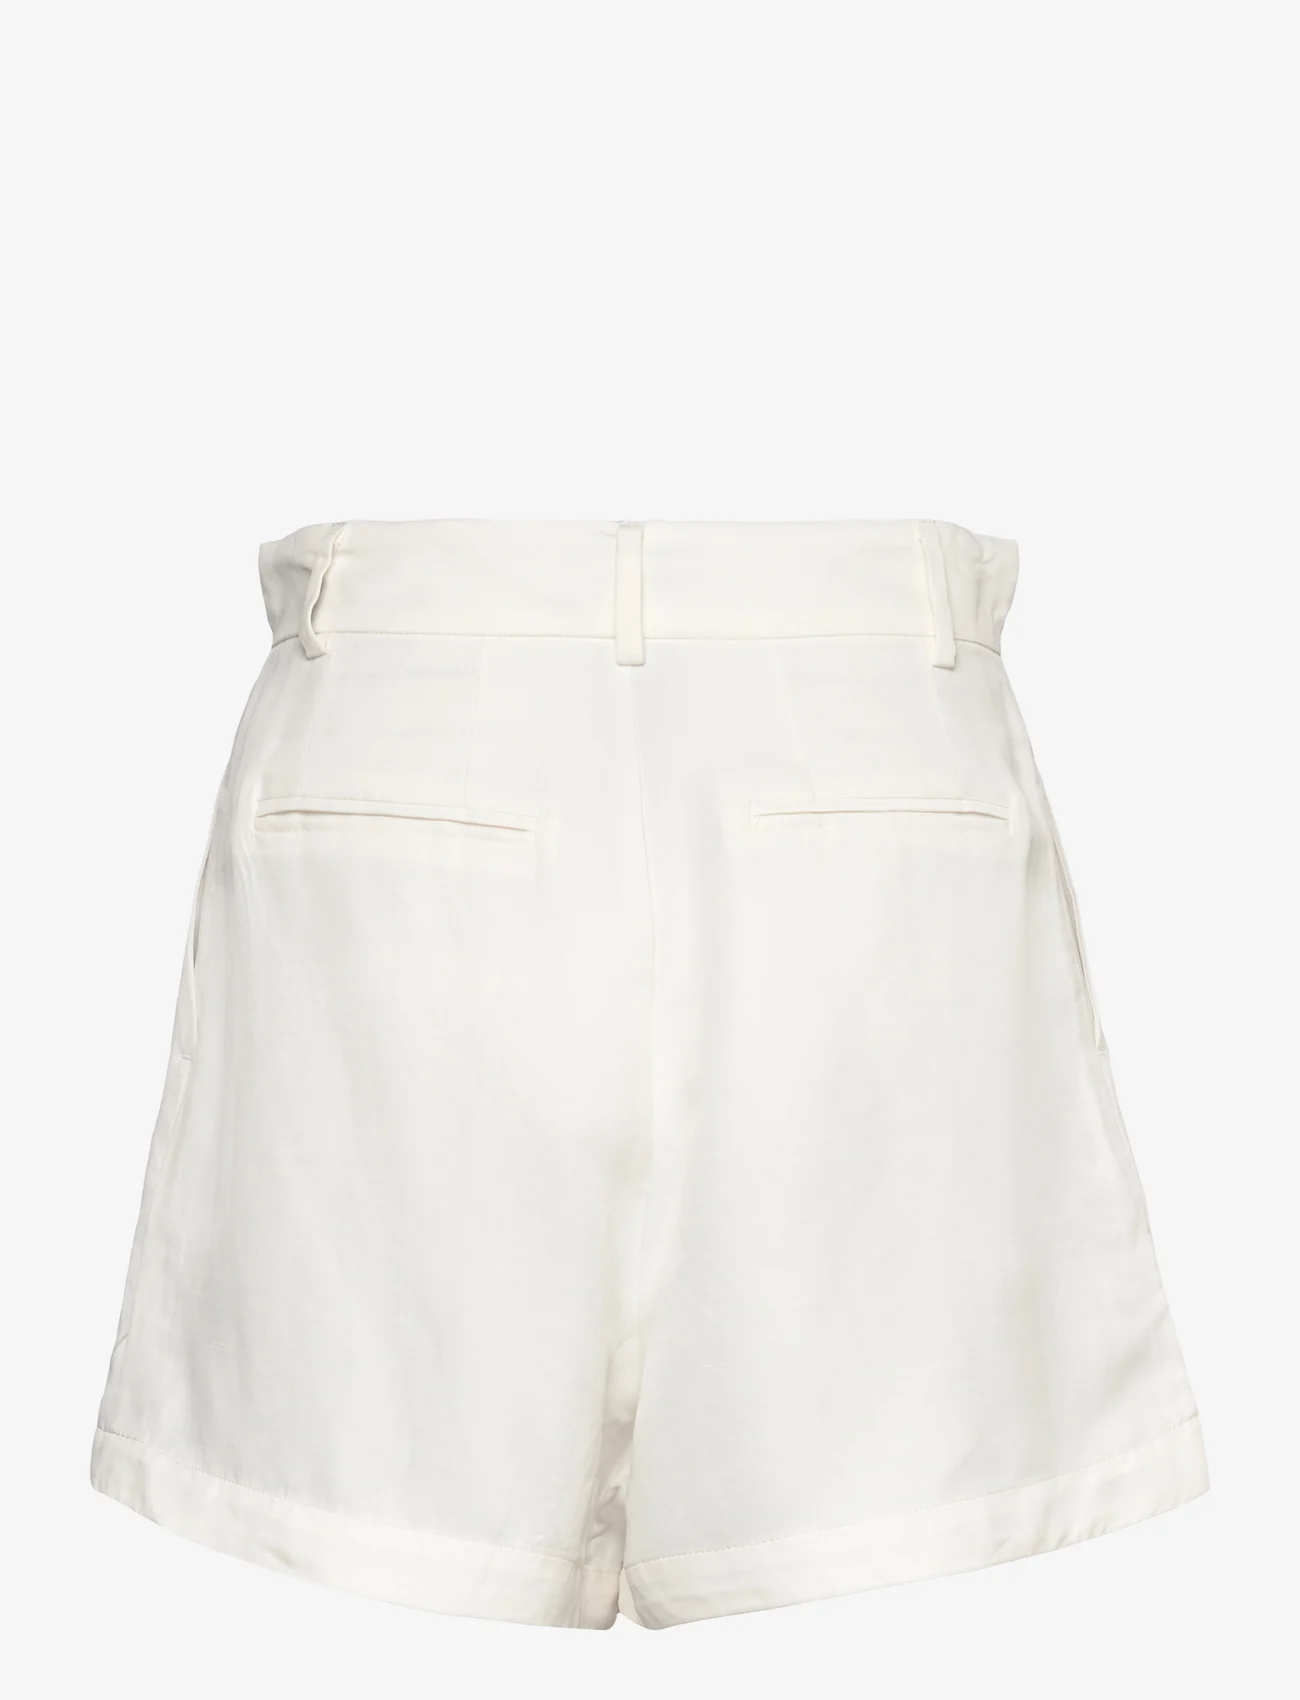 Ahlvar Gallery - Noma linen shorts - off-white - 1